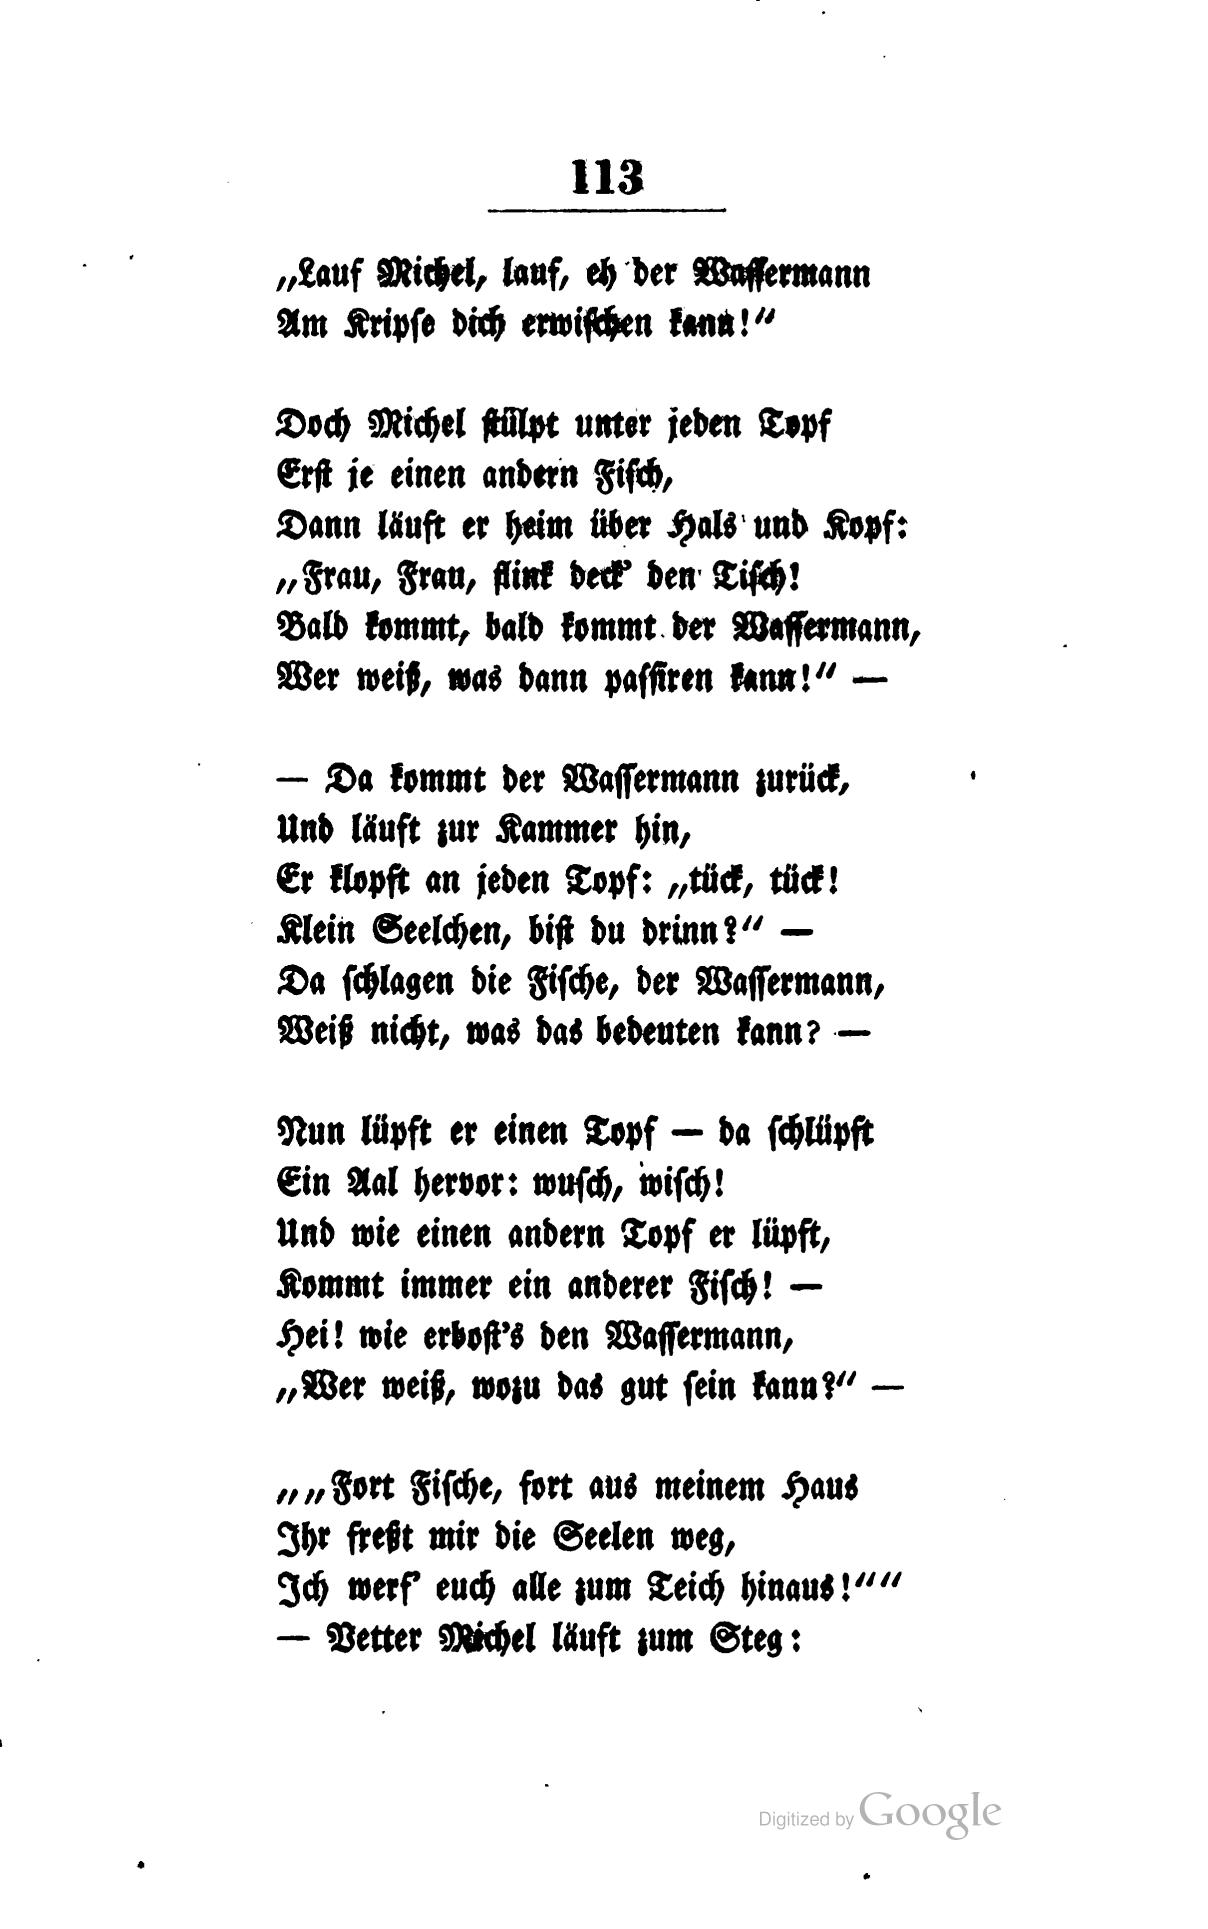 File Kopisch Gedichte 113 Jpg Wikimedia Commons